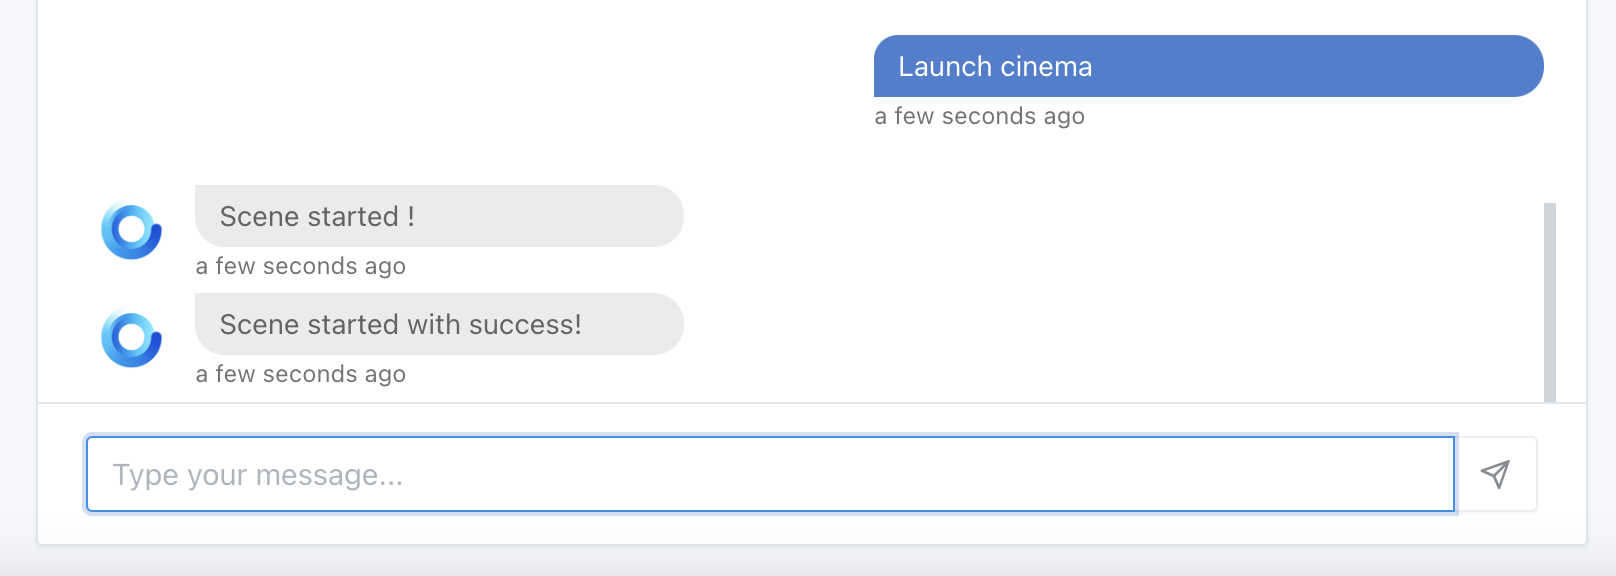 Launch chat scene